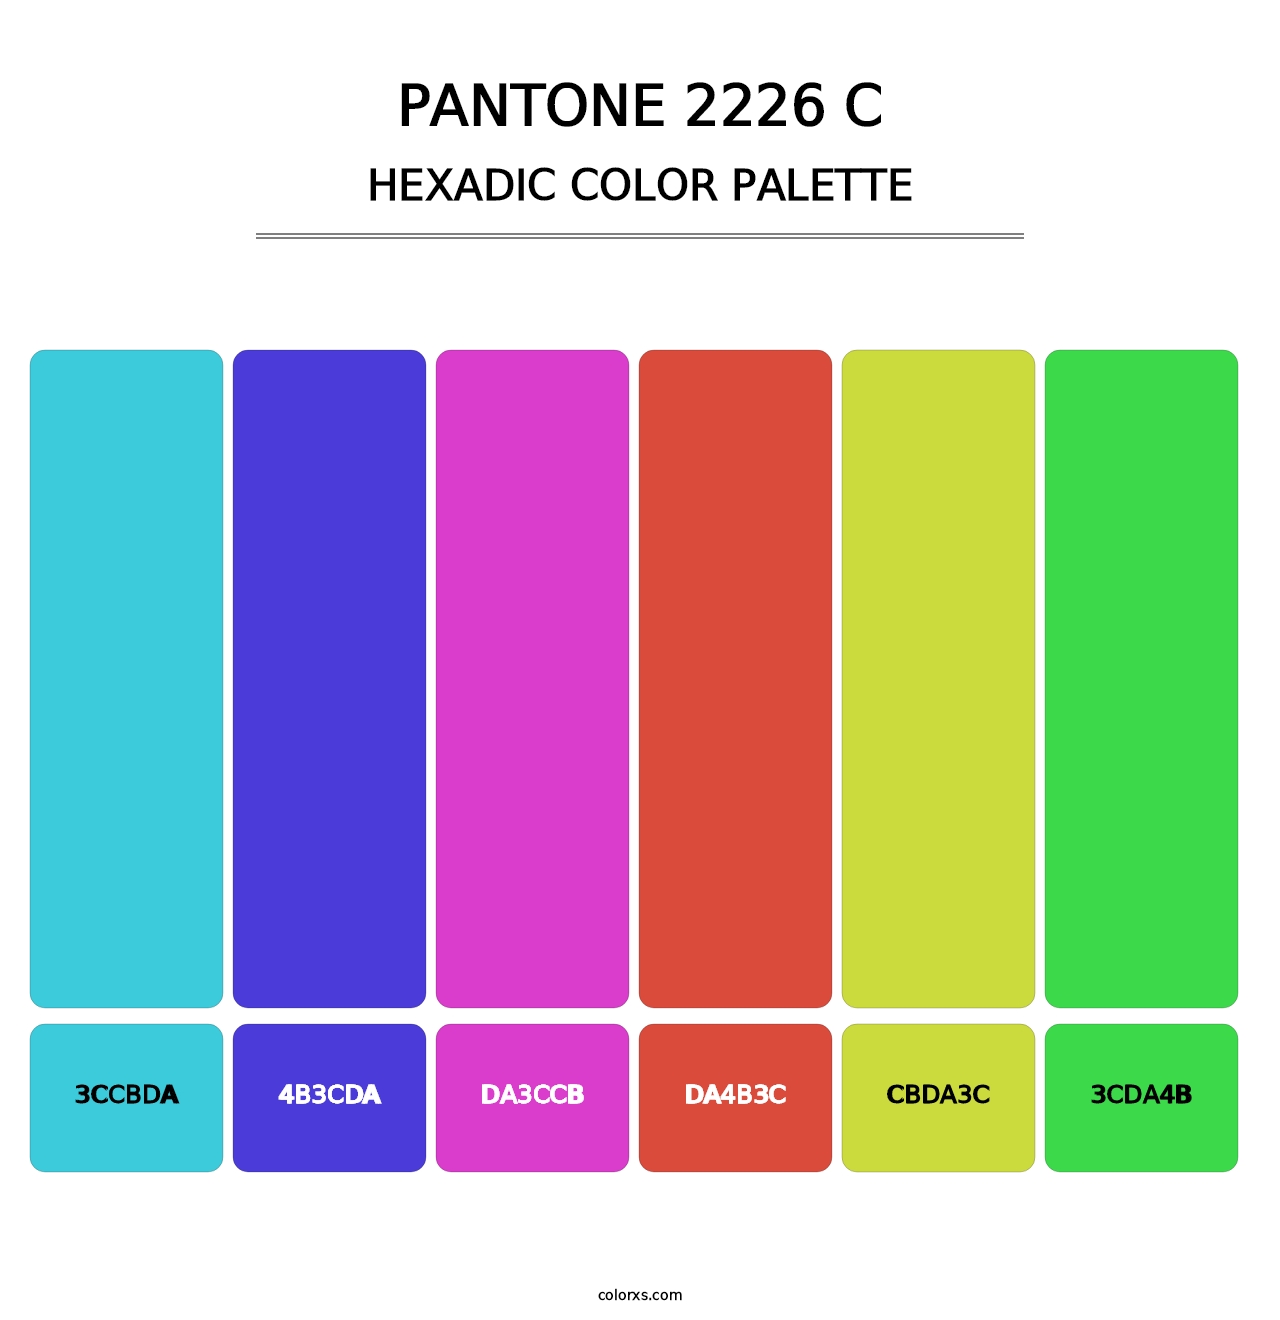 PANTONE 2226 C - Hexadic Color Palette